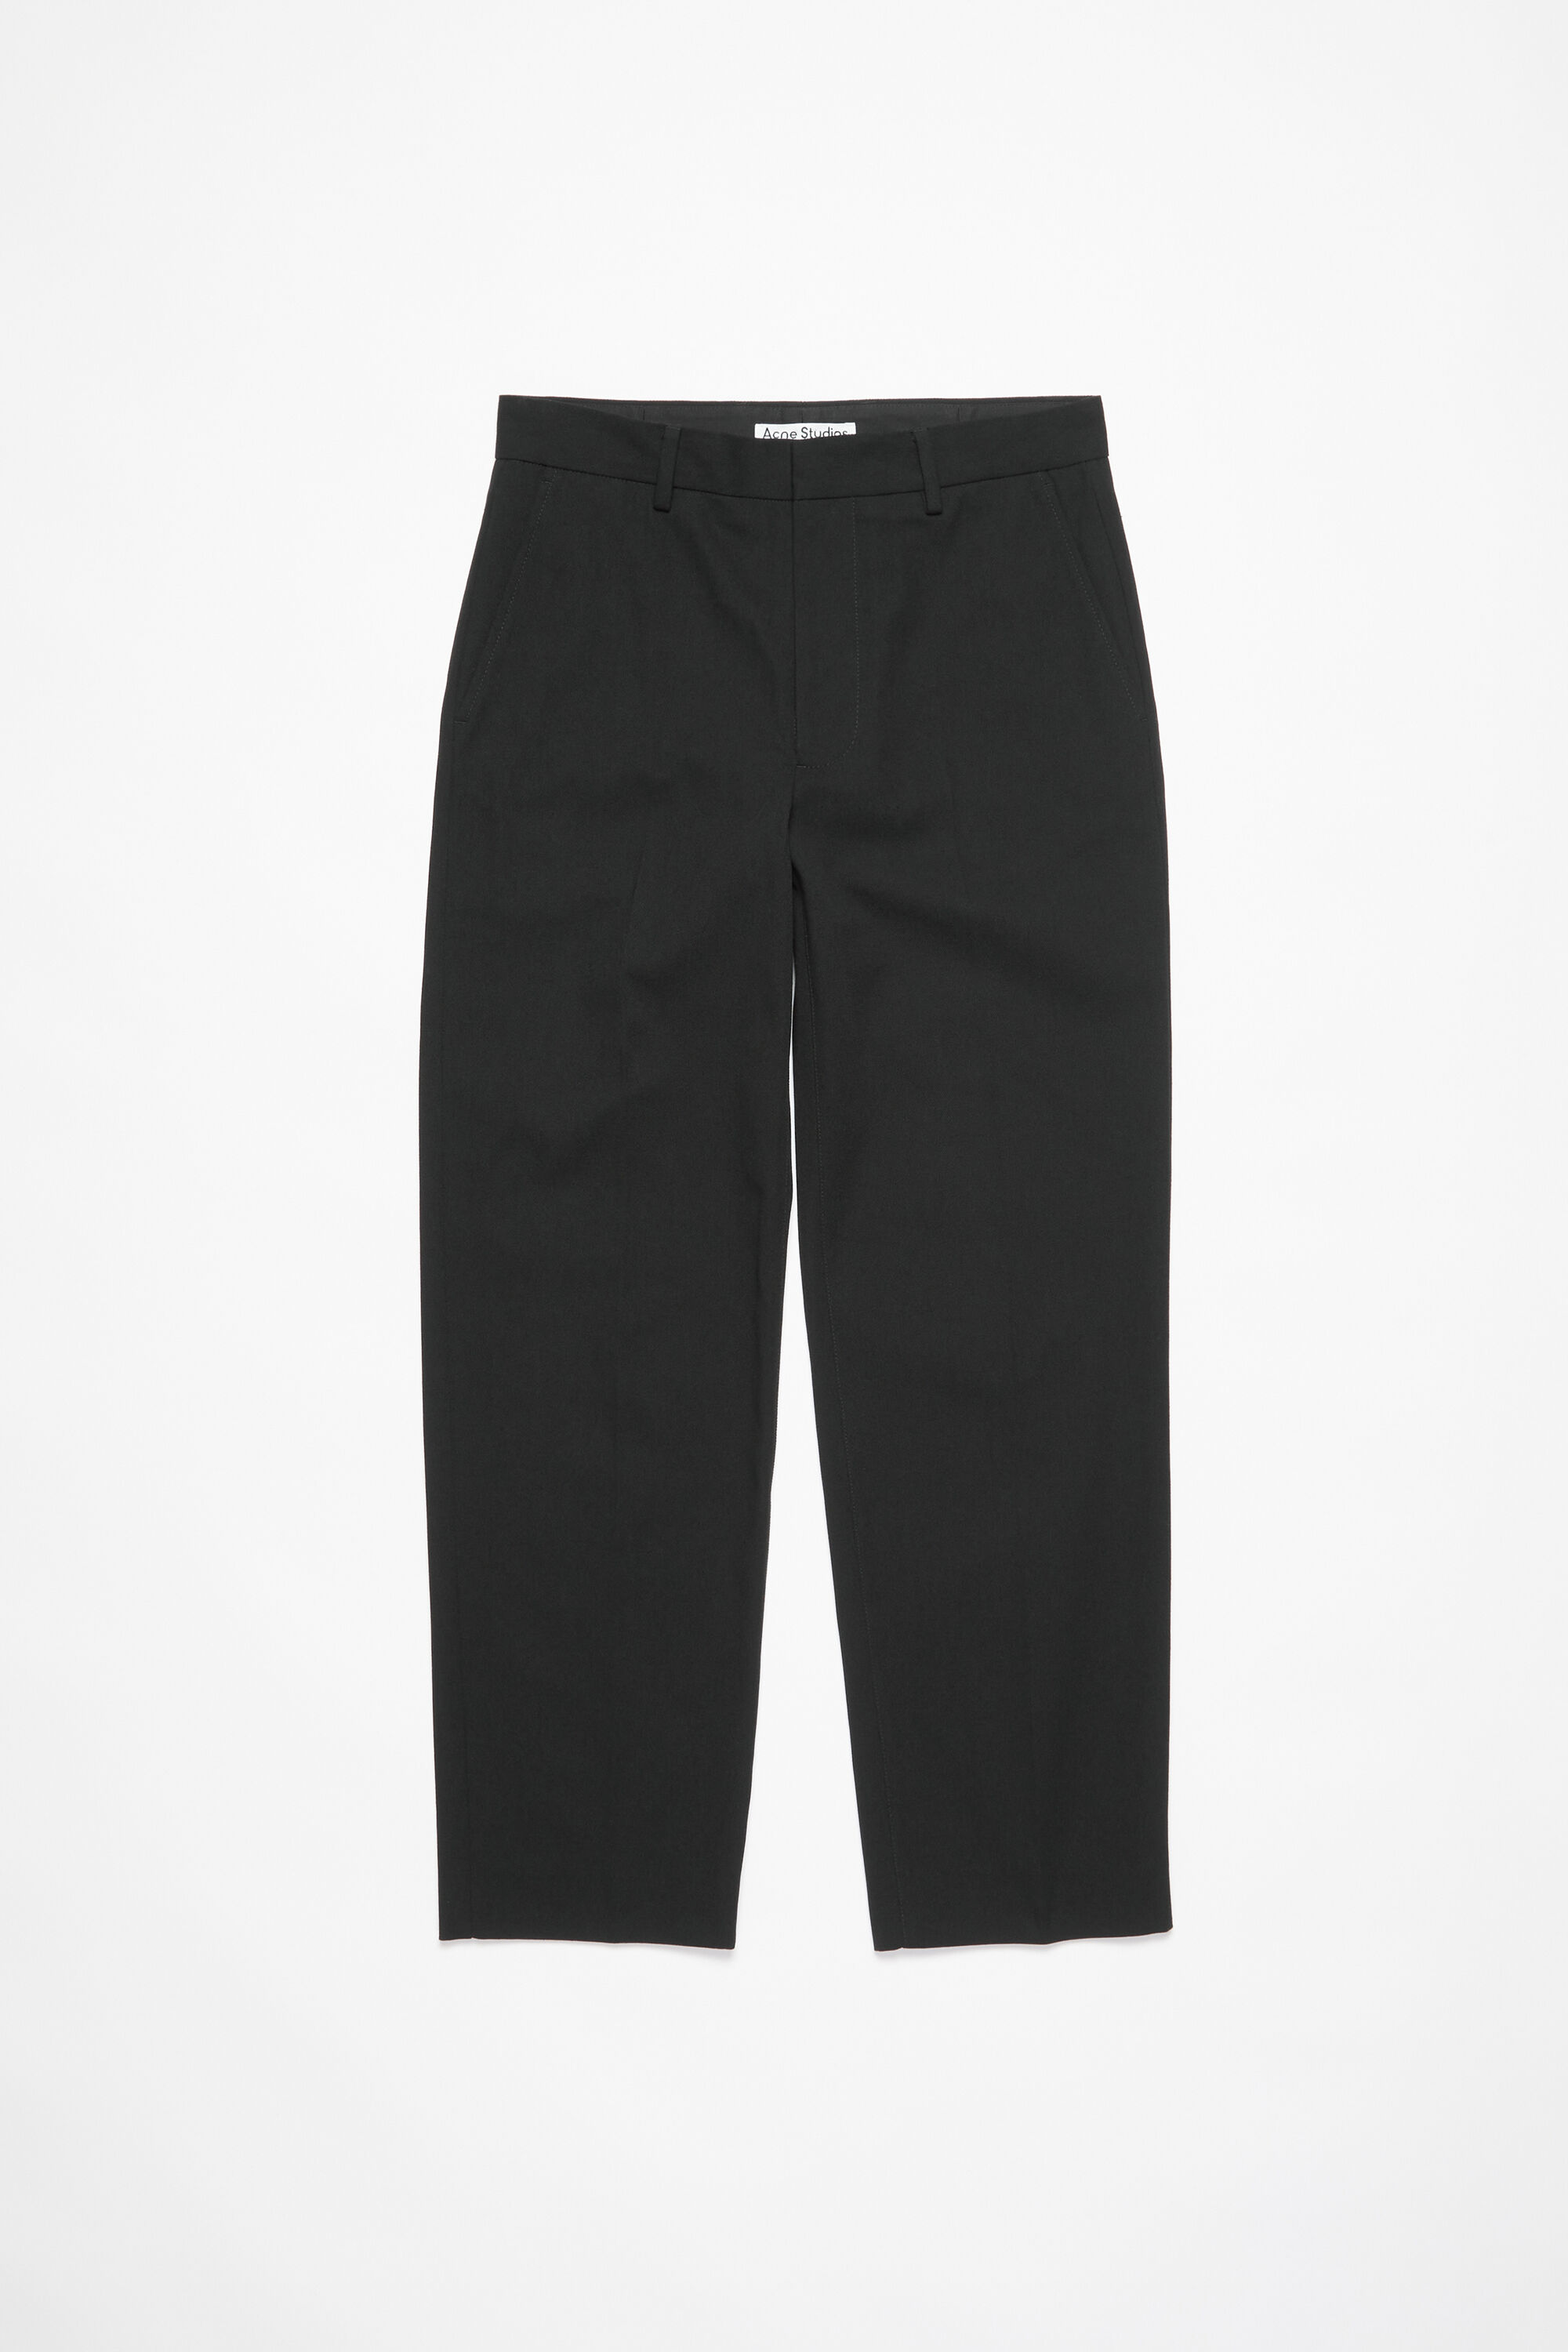 Acne Studios - Twill cotton-blend trousers - Black